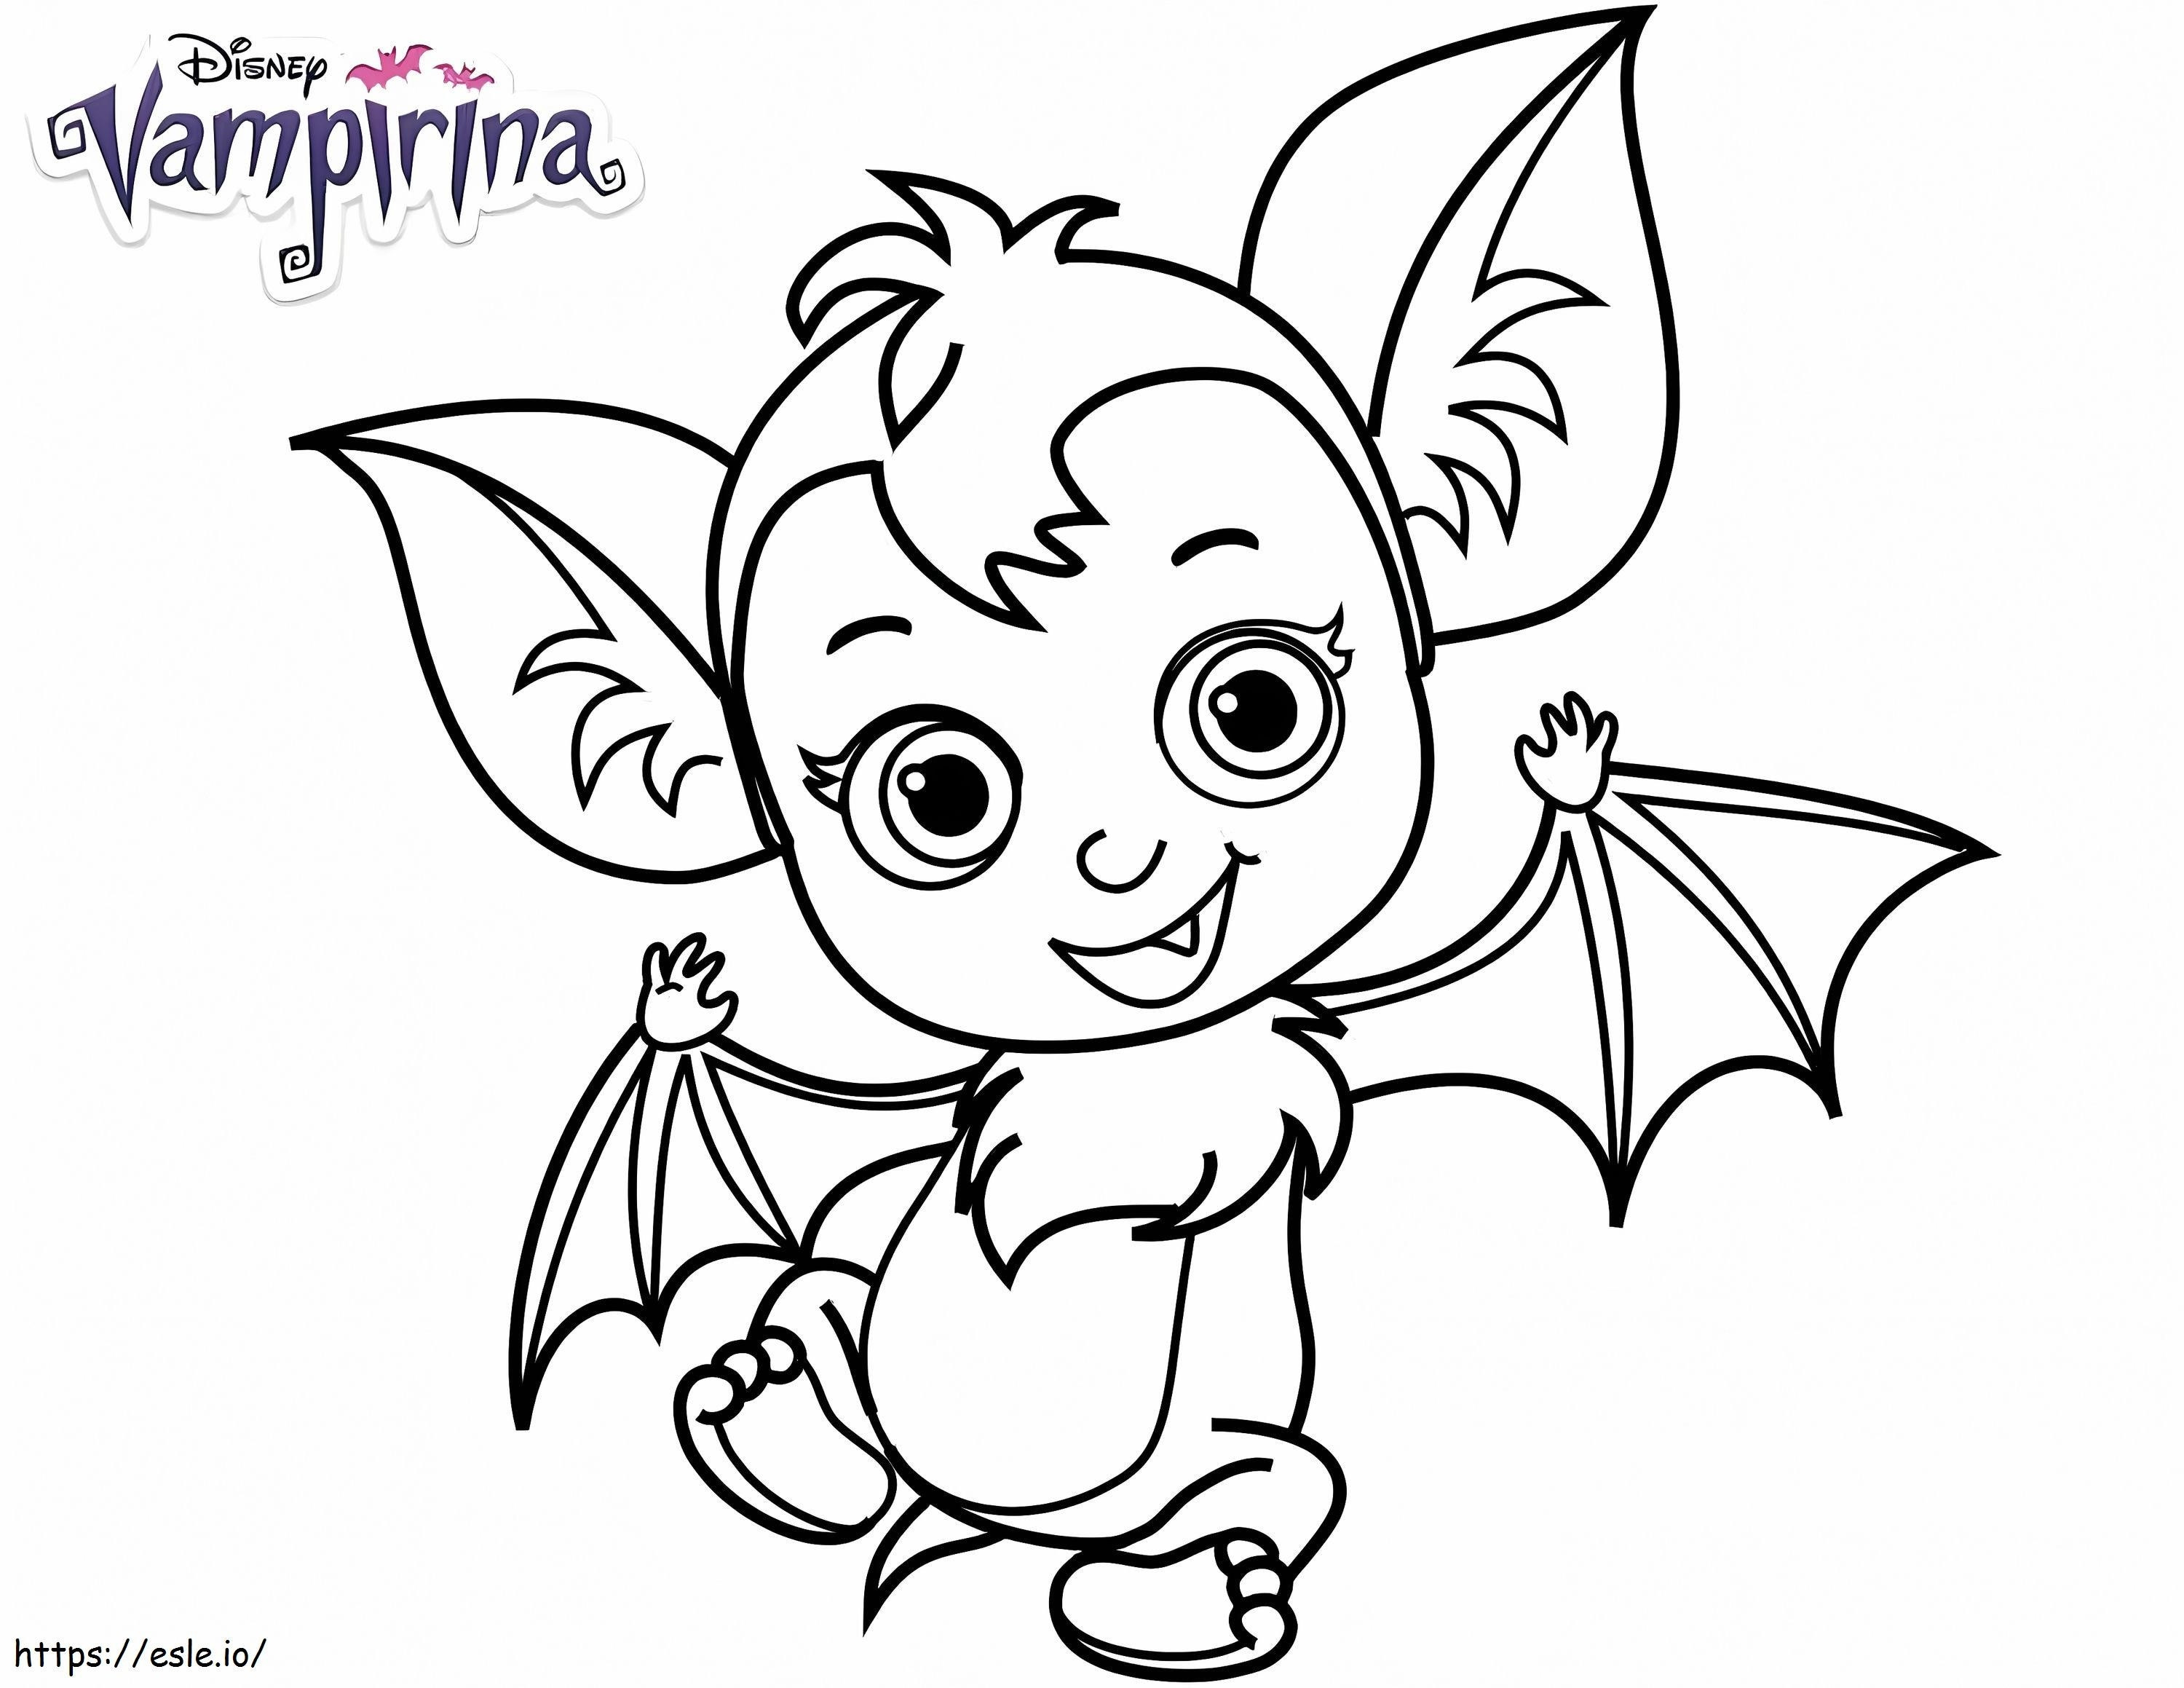 1580373398 Cute Baby Nosy Bat From Disney Vampirina To Printable Free coloring page